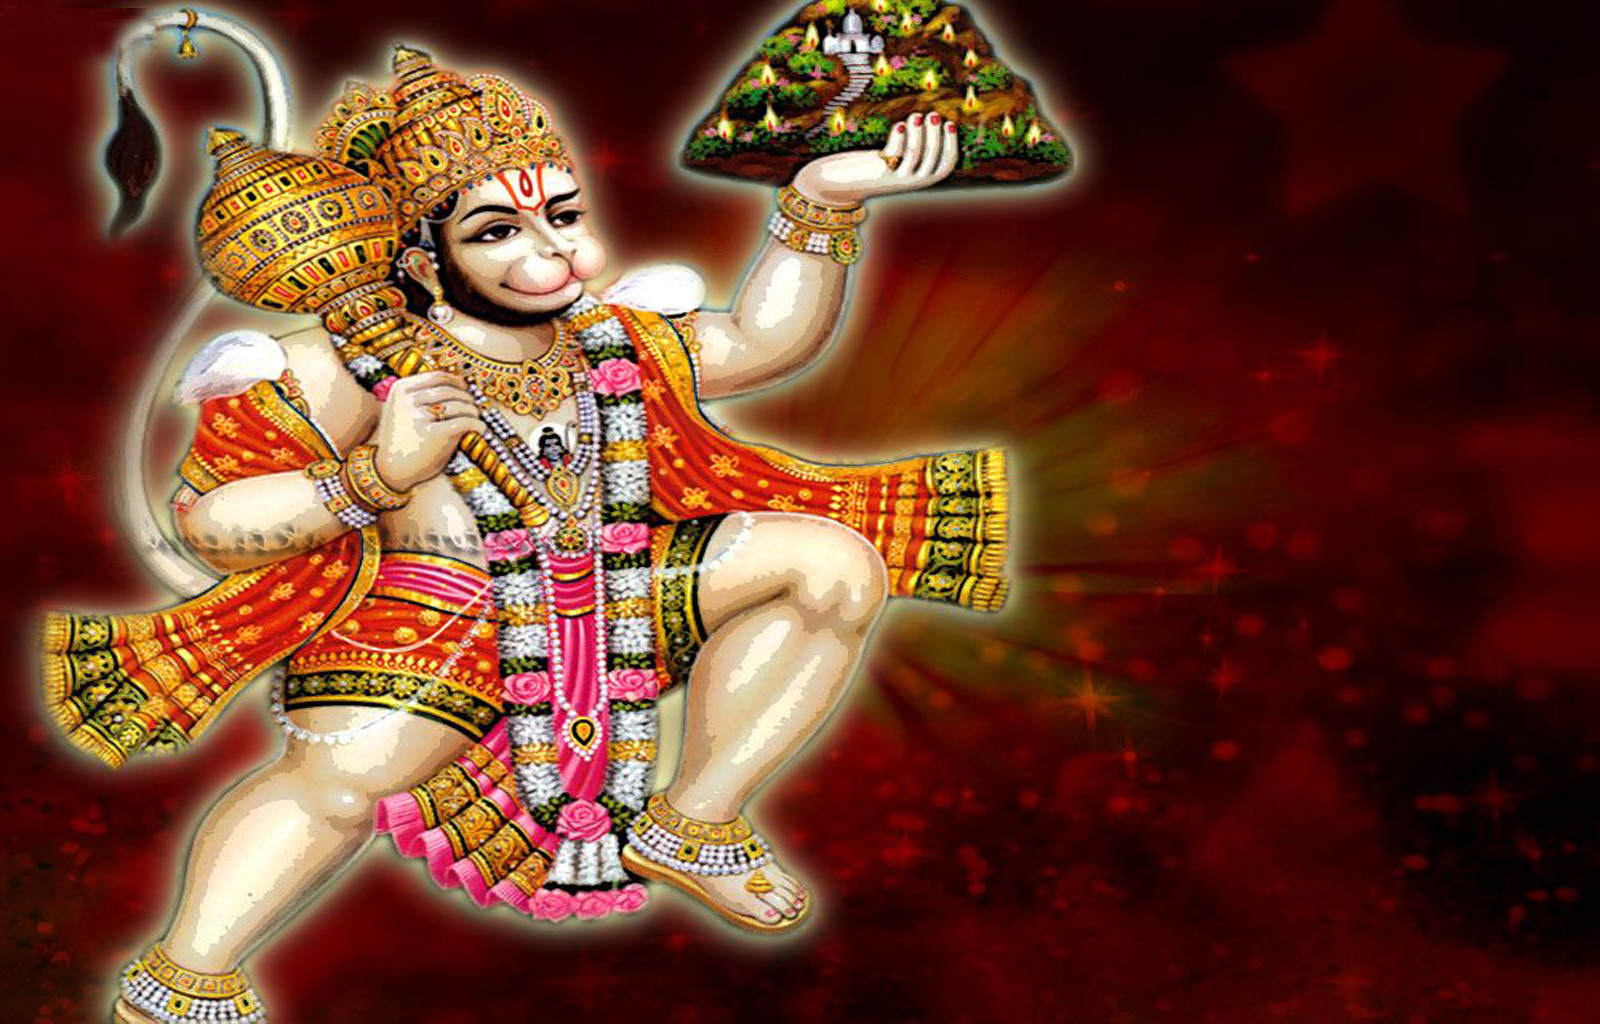 Lord Hanuman God animated hanuman wallpapers for iphone and mobile ...